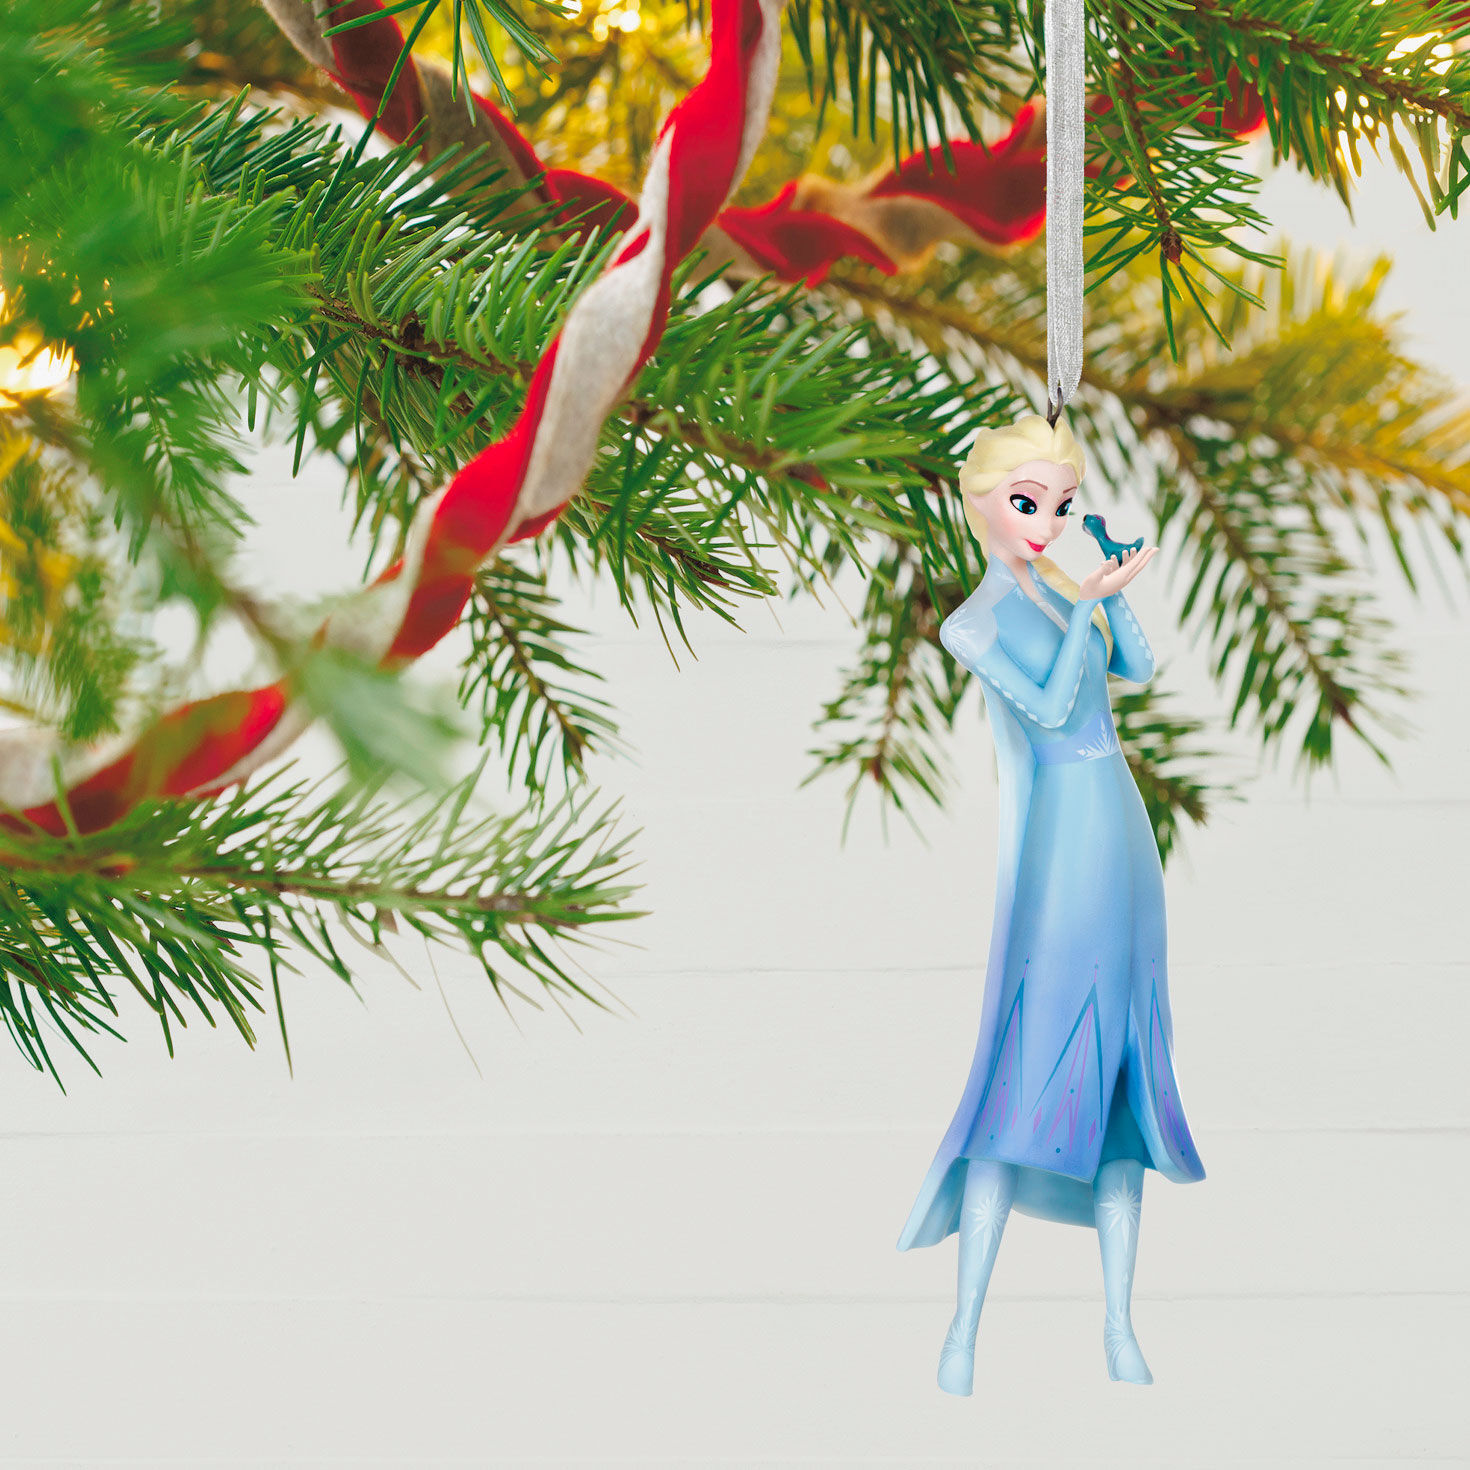 2015 Hallmark Keepsake Ornament Let It Go Queen Elsa Disney Frozen B10 